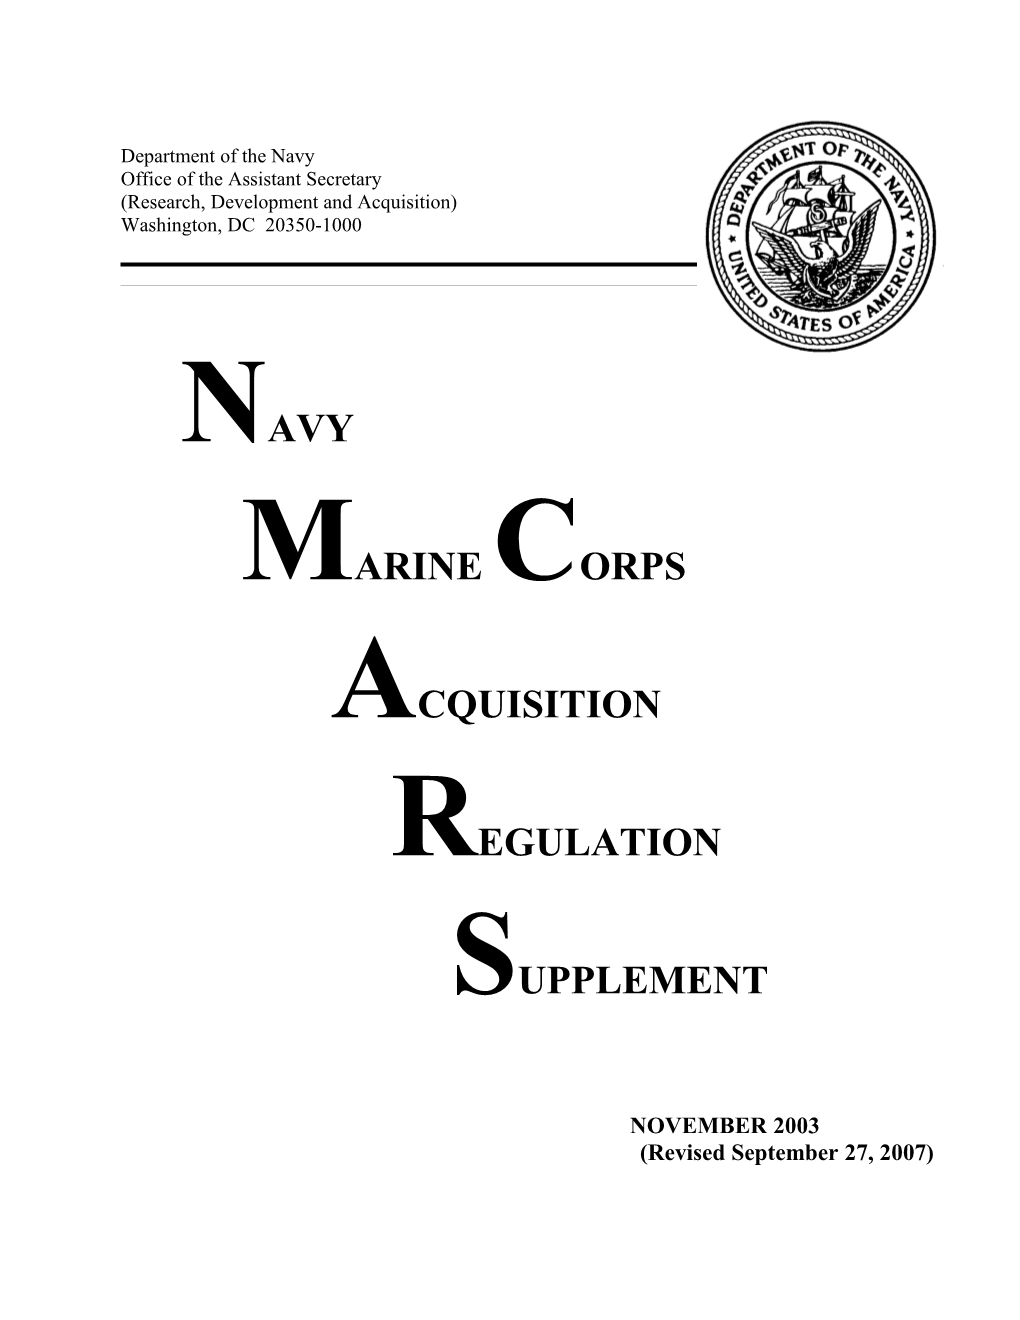 Navy Marine Corps Acquisition Regulation Supplement s2